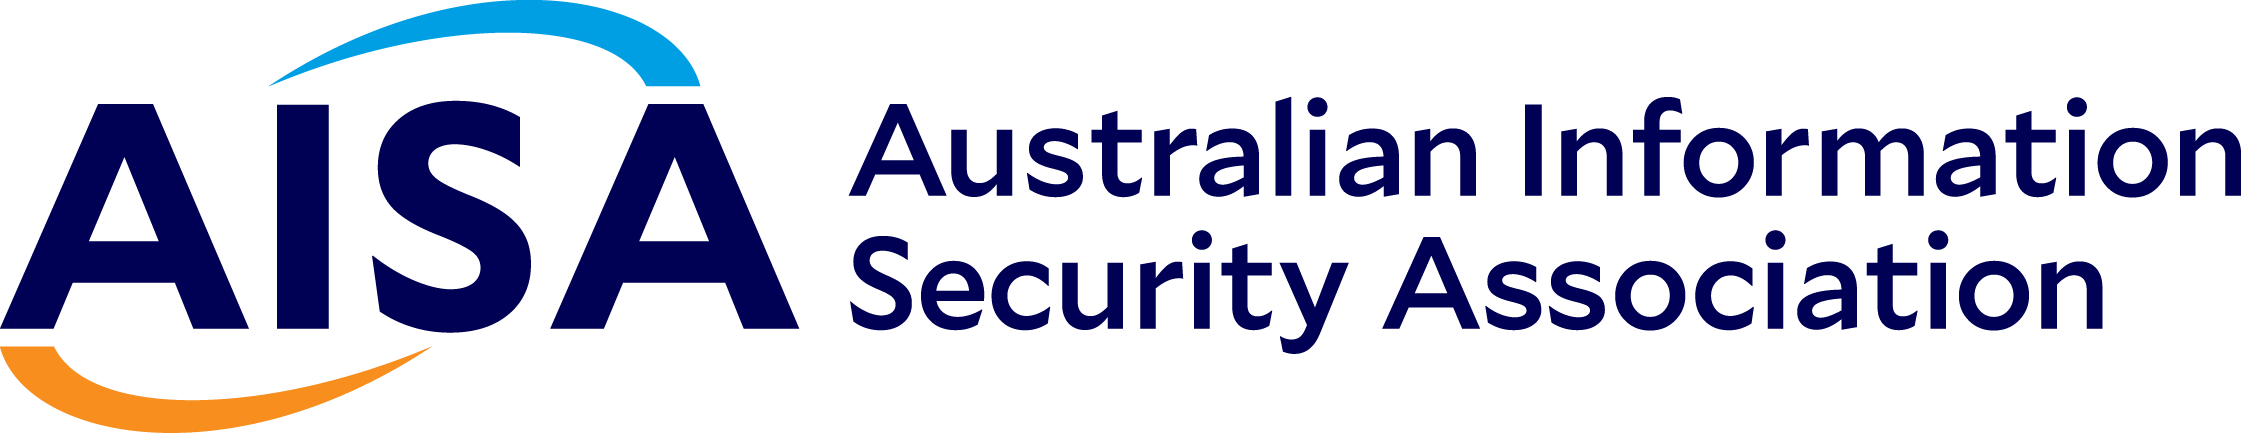 Logotipo de AISA (Australian Information Security Association)